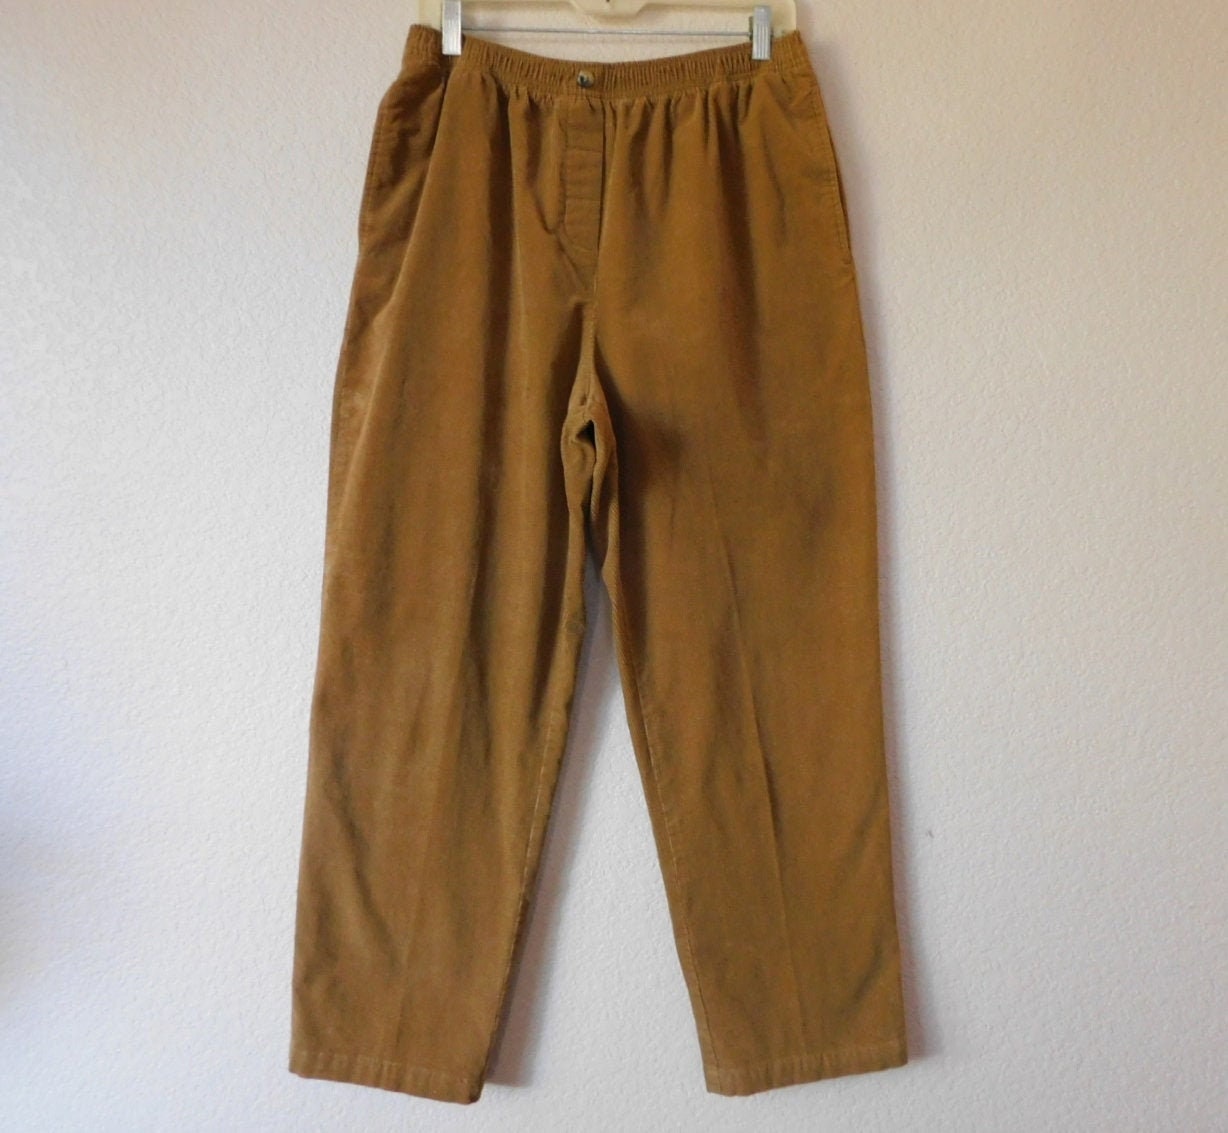 Appleseed's petite women's tan corduroy pants/baggy | Etsy